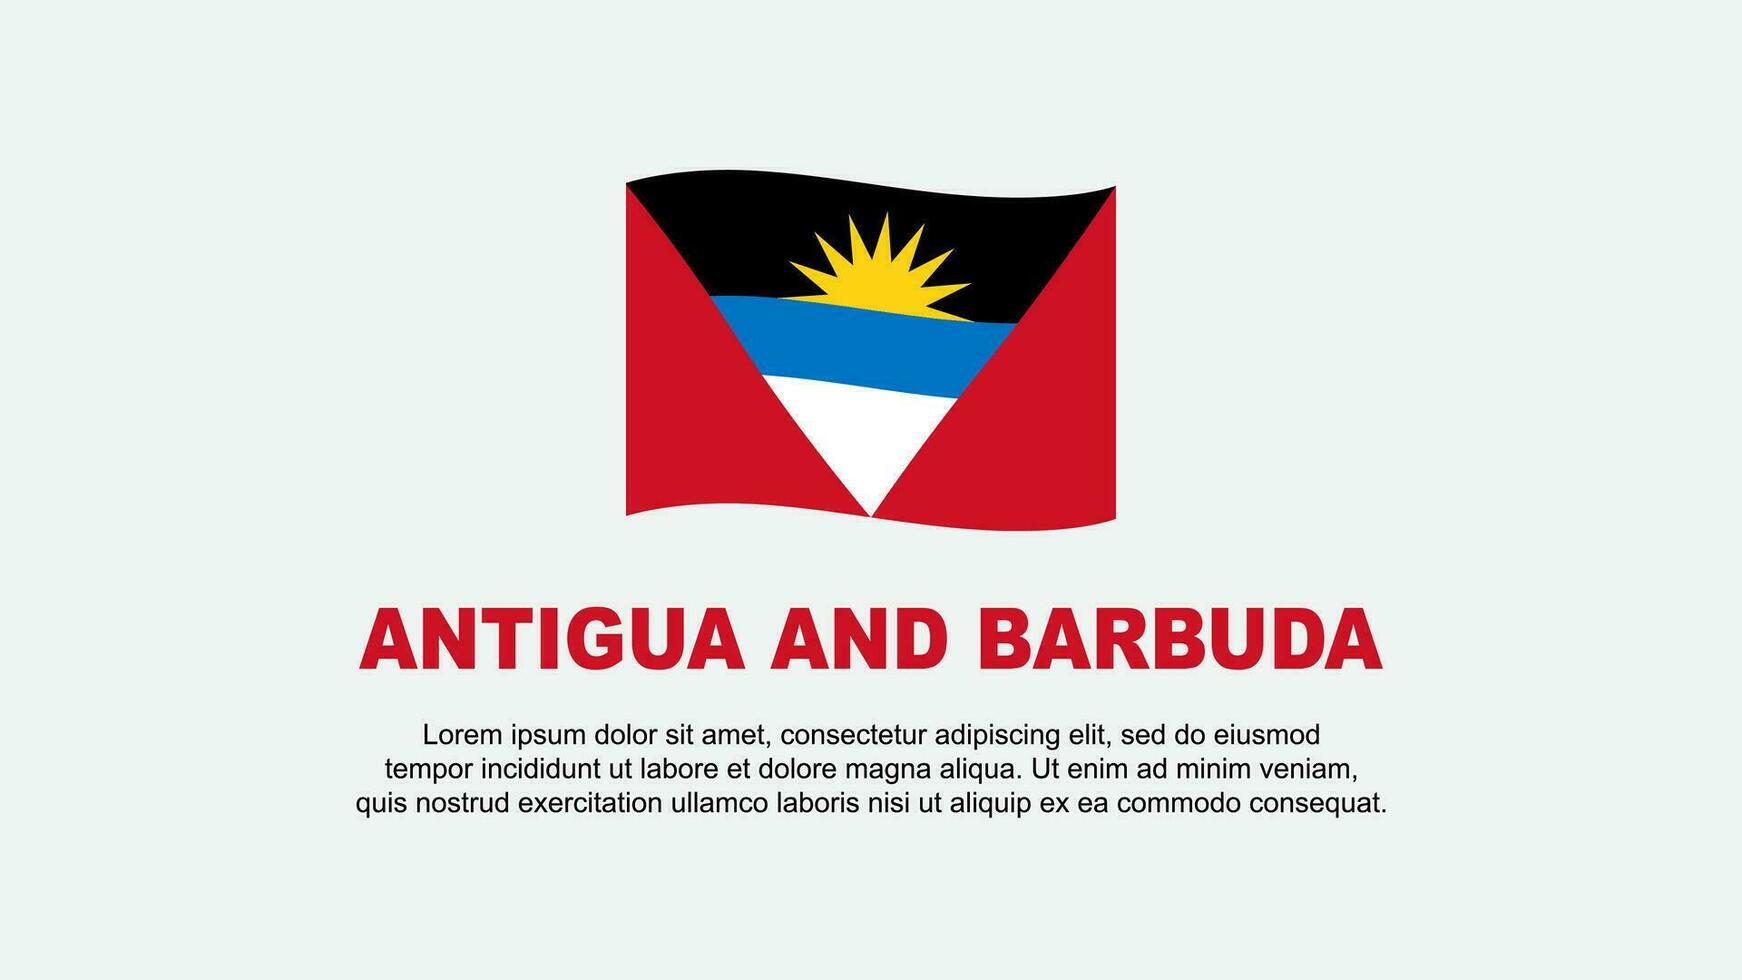 Antigua und Barbuda Flagge abstrakt Hintergrund Design Vorlage. Antigua und Barbuda Unabhängigkeit Tag Banner Sozial Medien Vektor Illustration. Antigua und Barbuda Hintergrund